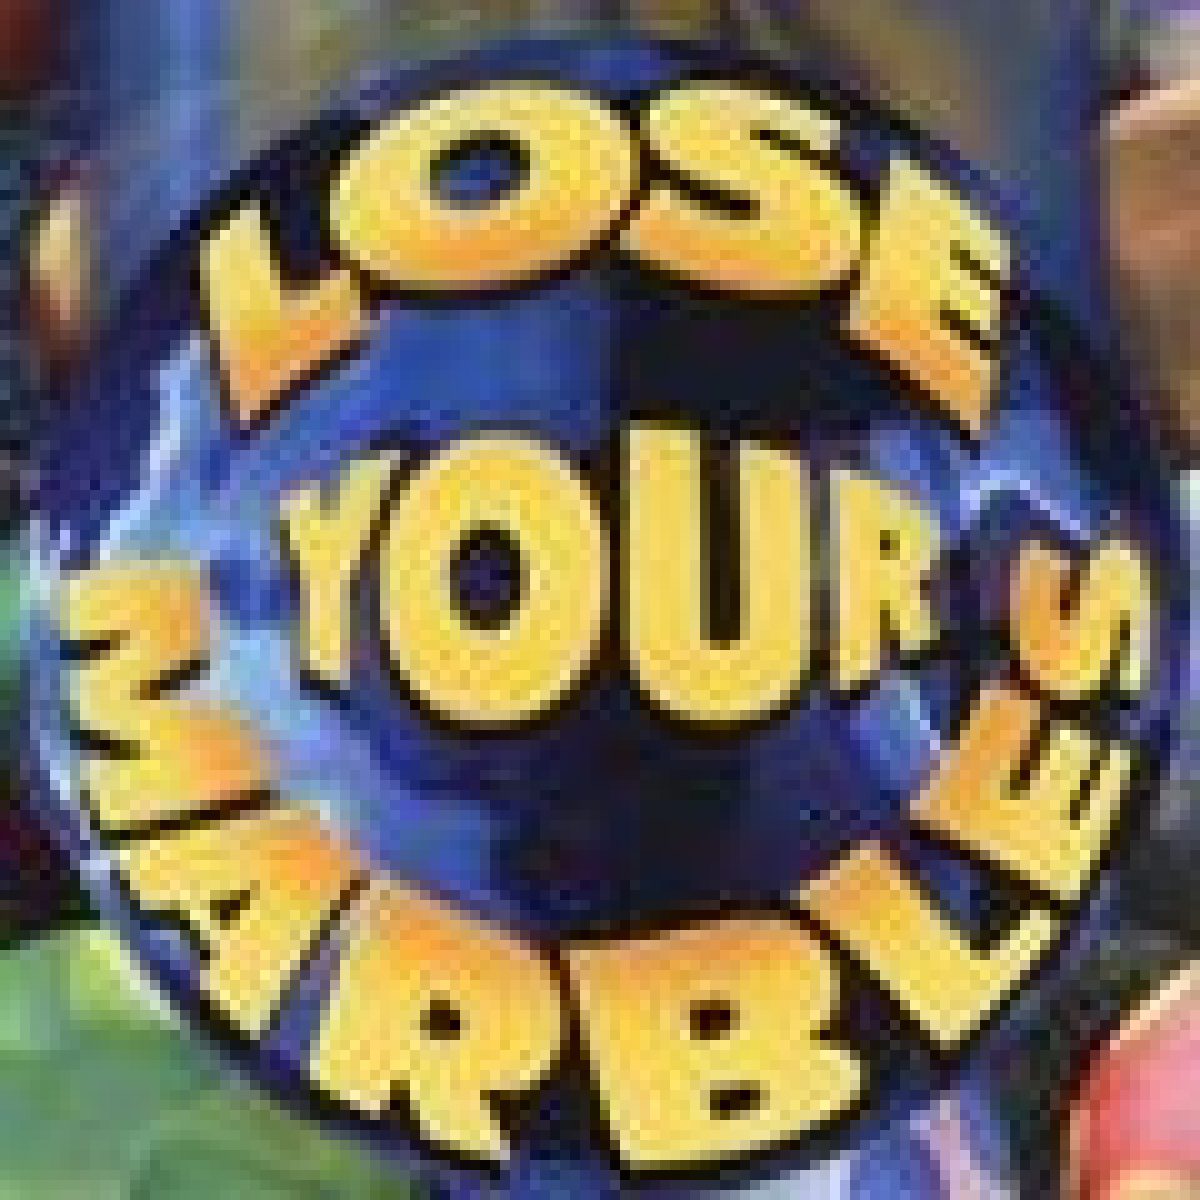 lose your marbles bid shoot 21